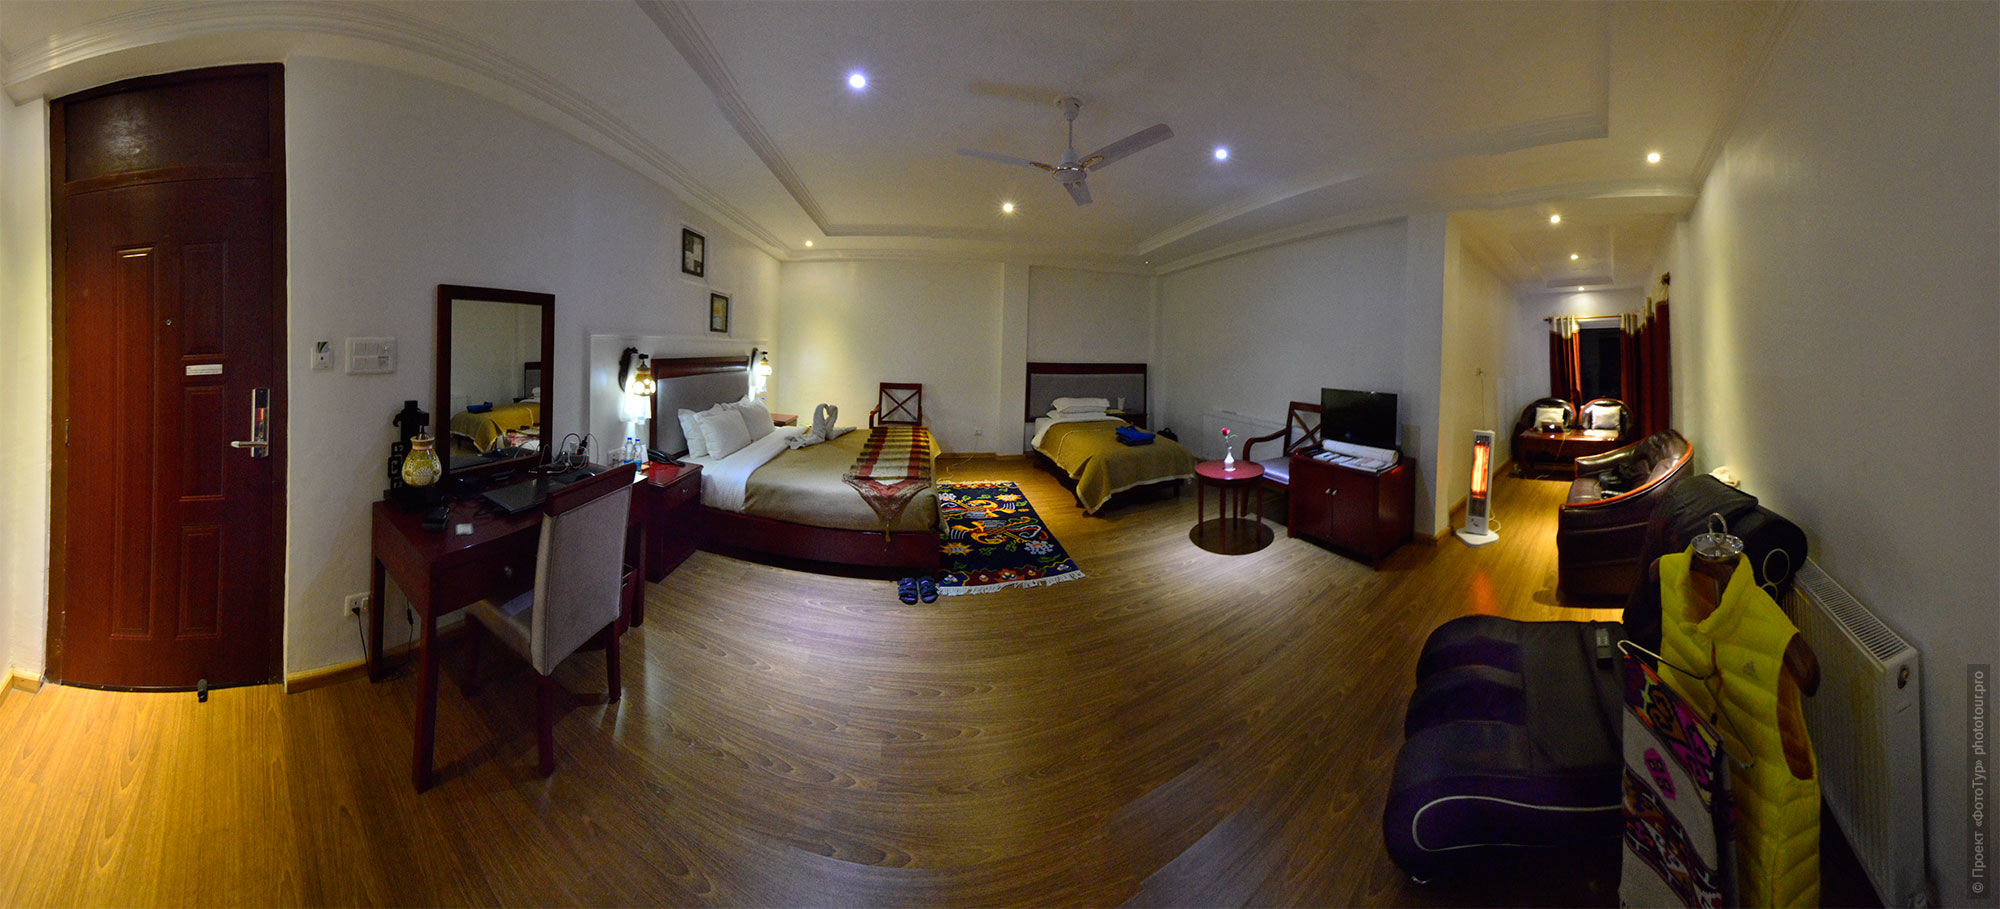 Комната в отеле Зен, Лех, Ладакх, Малый Тибет, Индия, январь 2019 года.